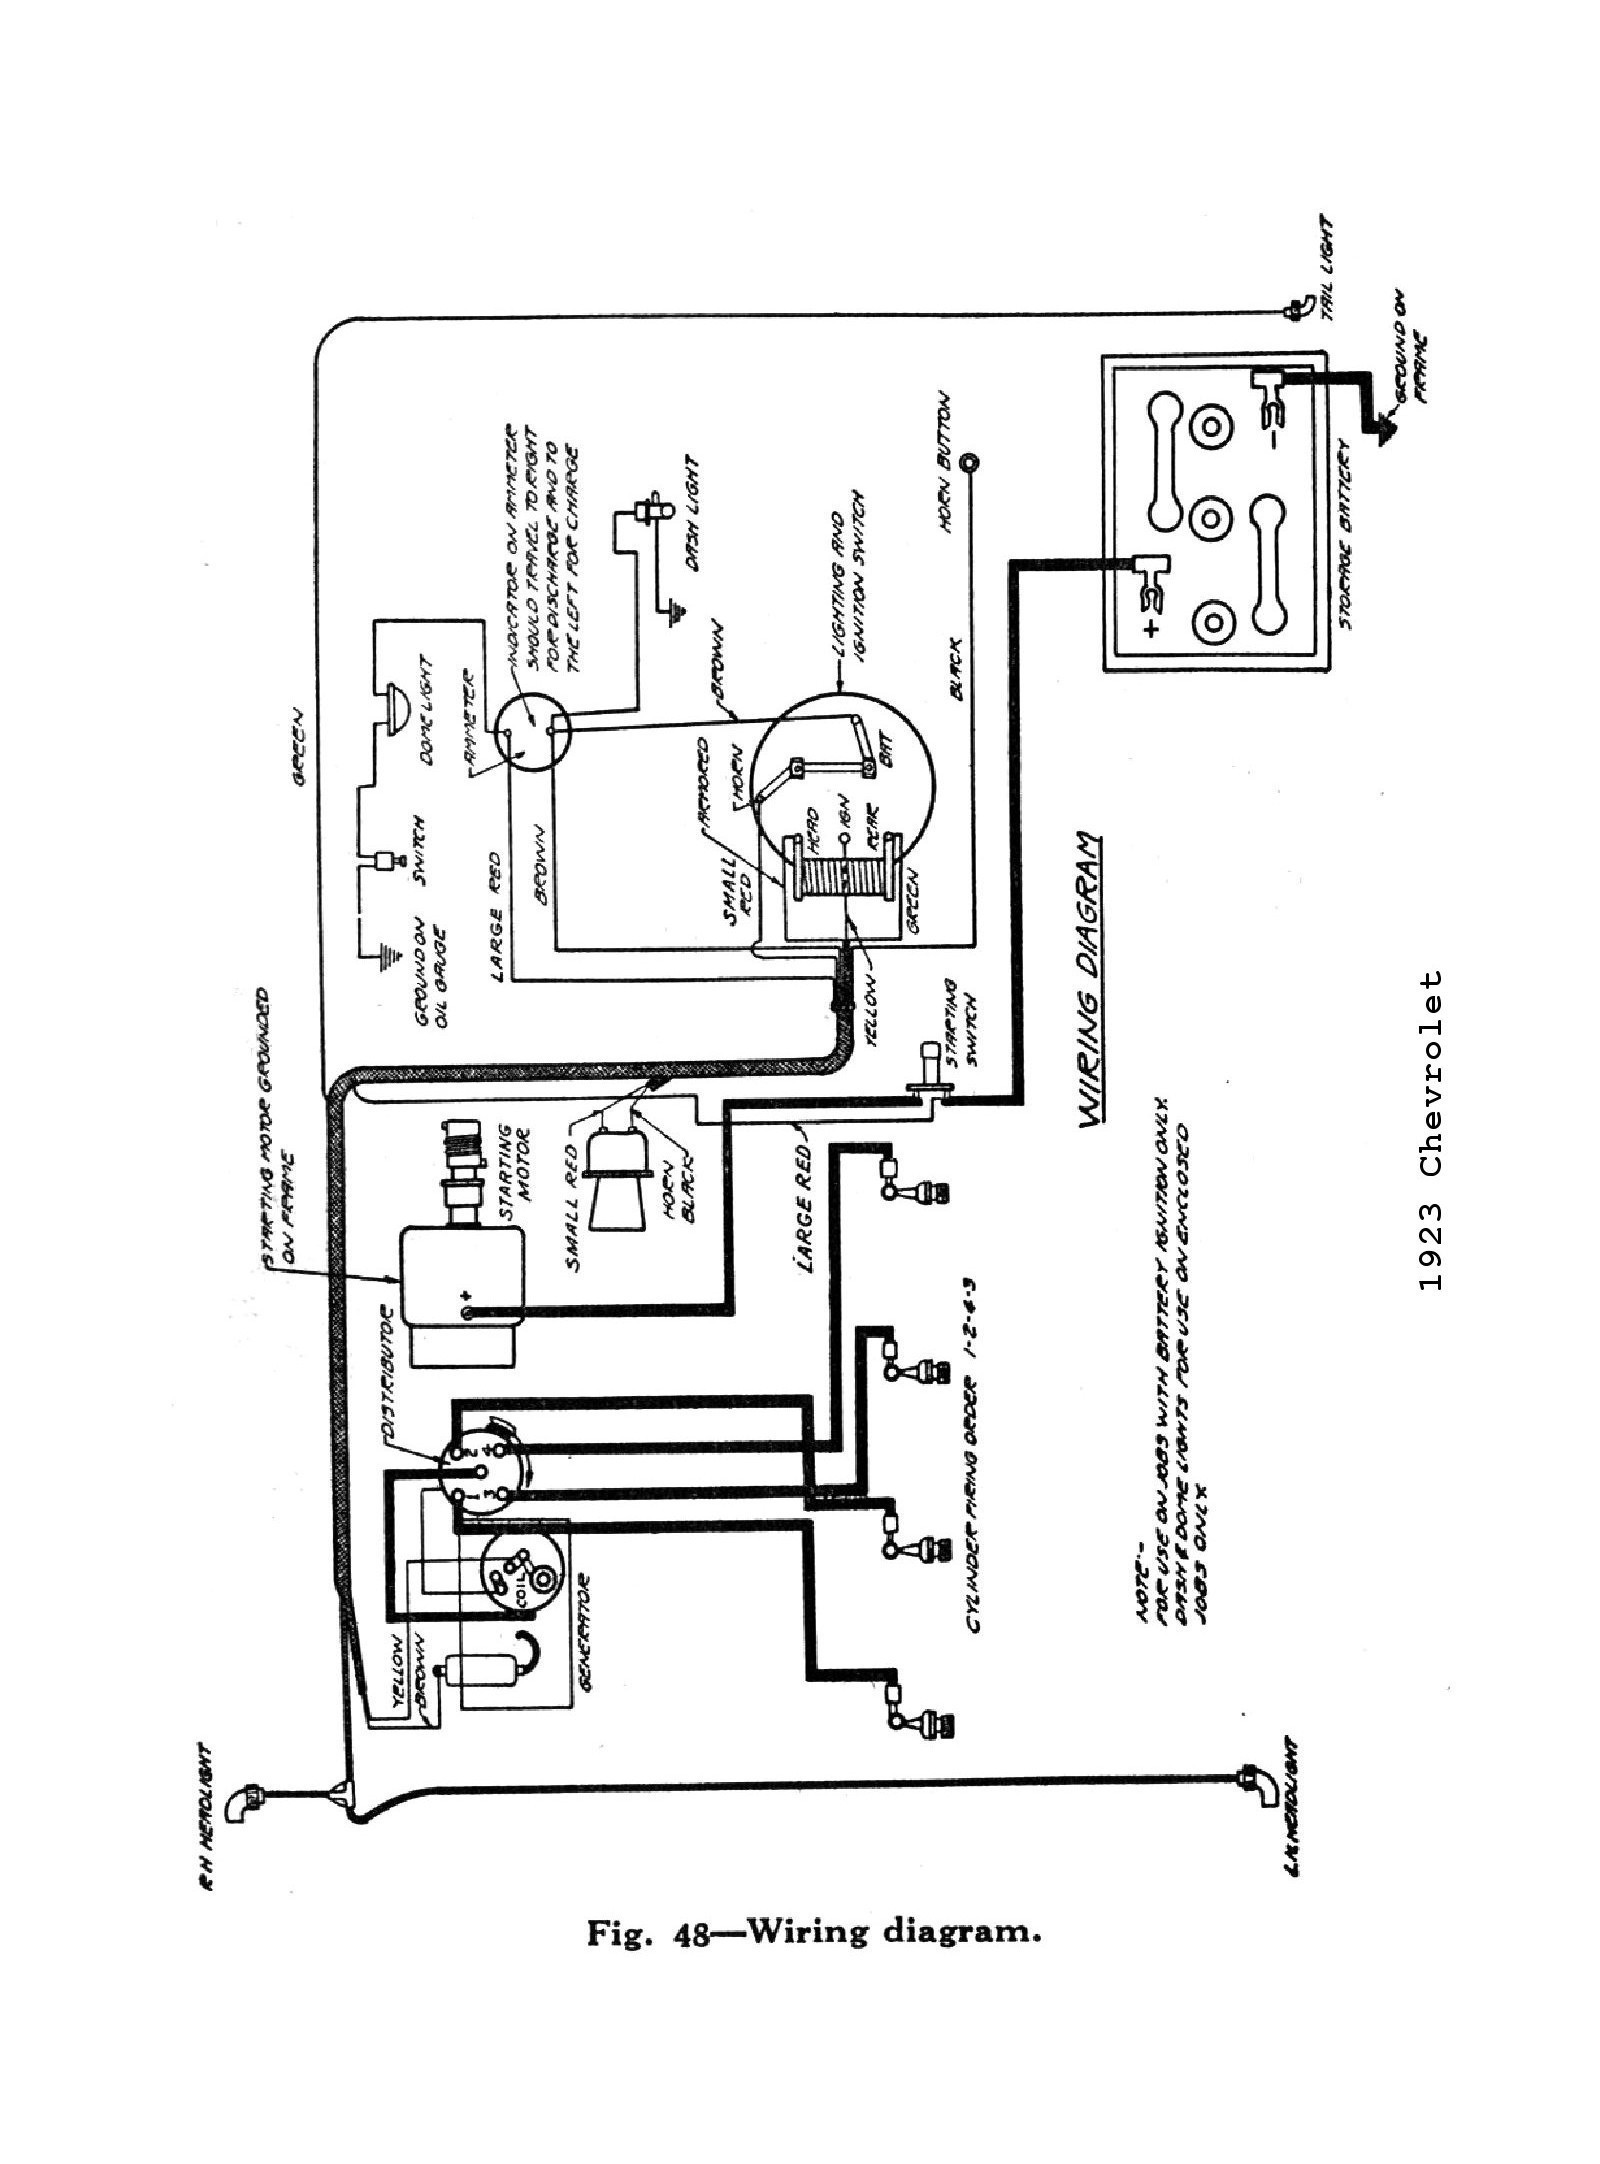 Gm Ls3 Crate Engine Wiring Diagram | My Wiring DIagram